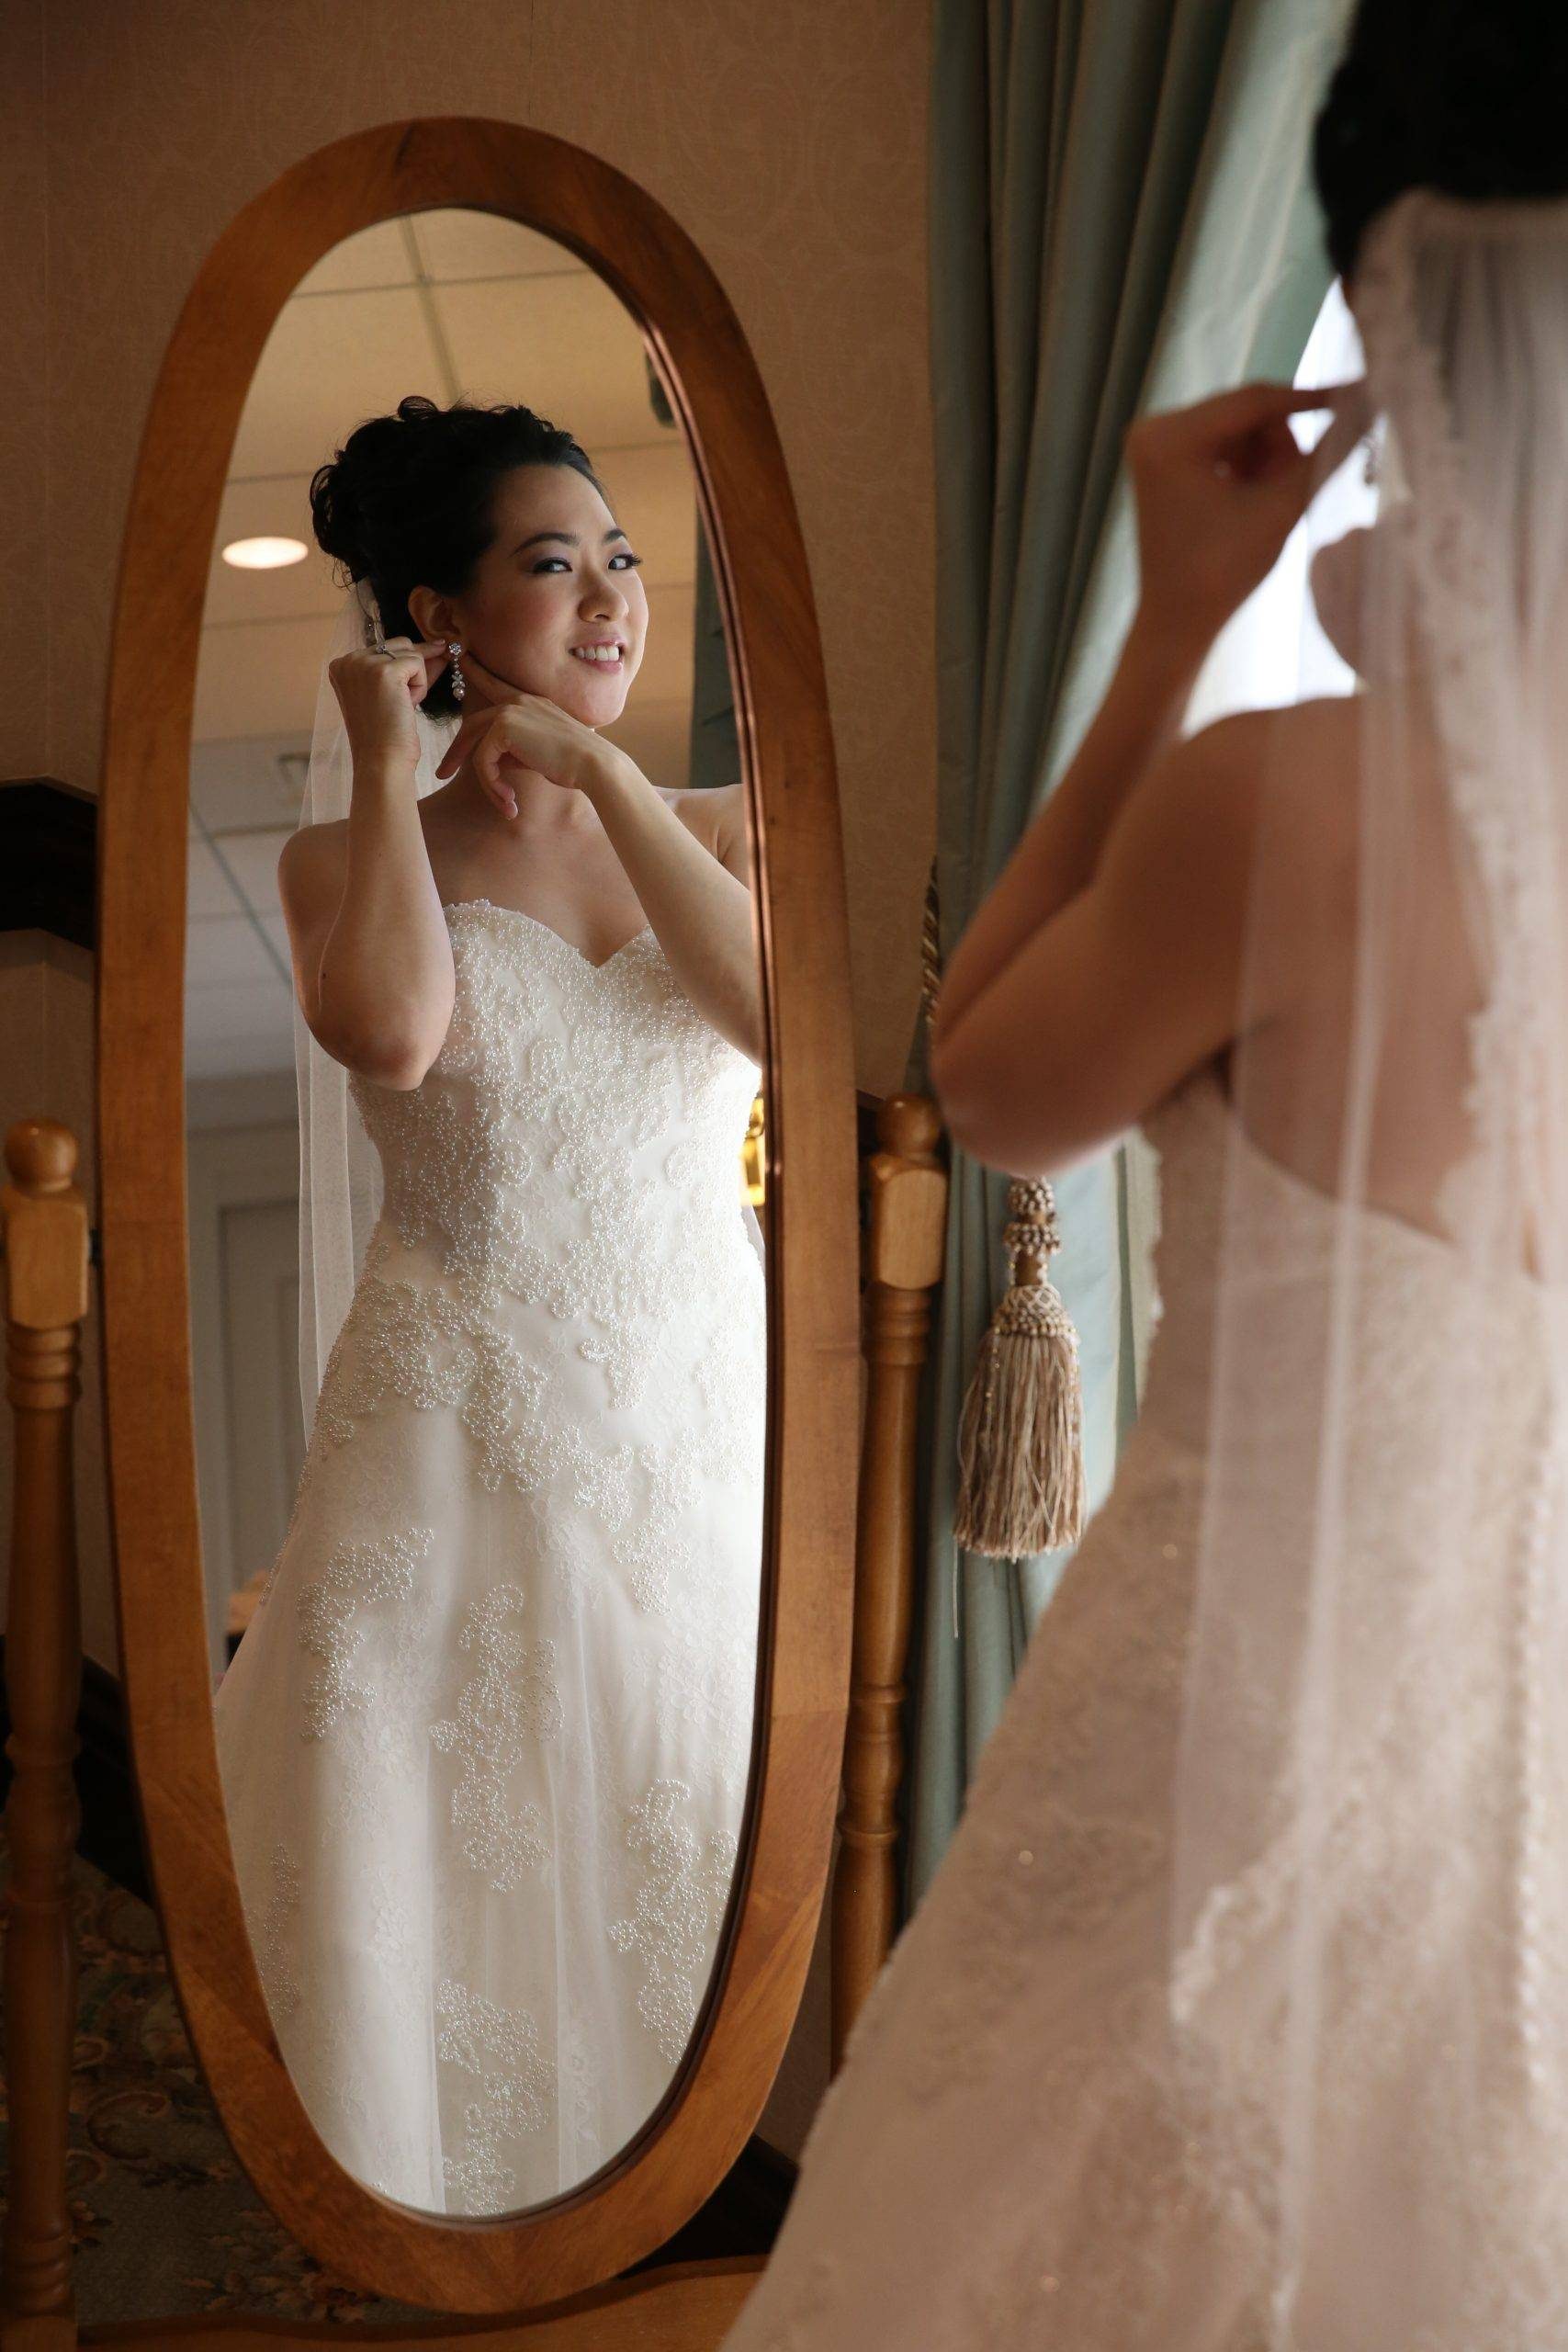 Brooklake bride getting ready in mirror